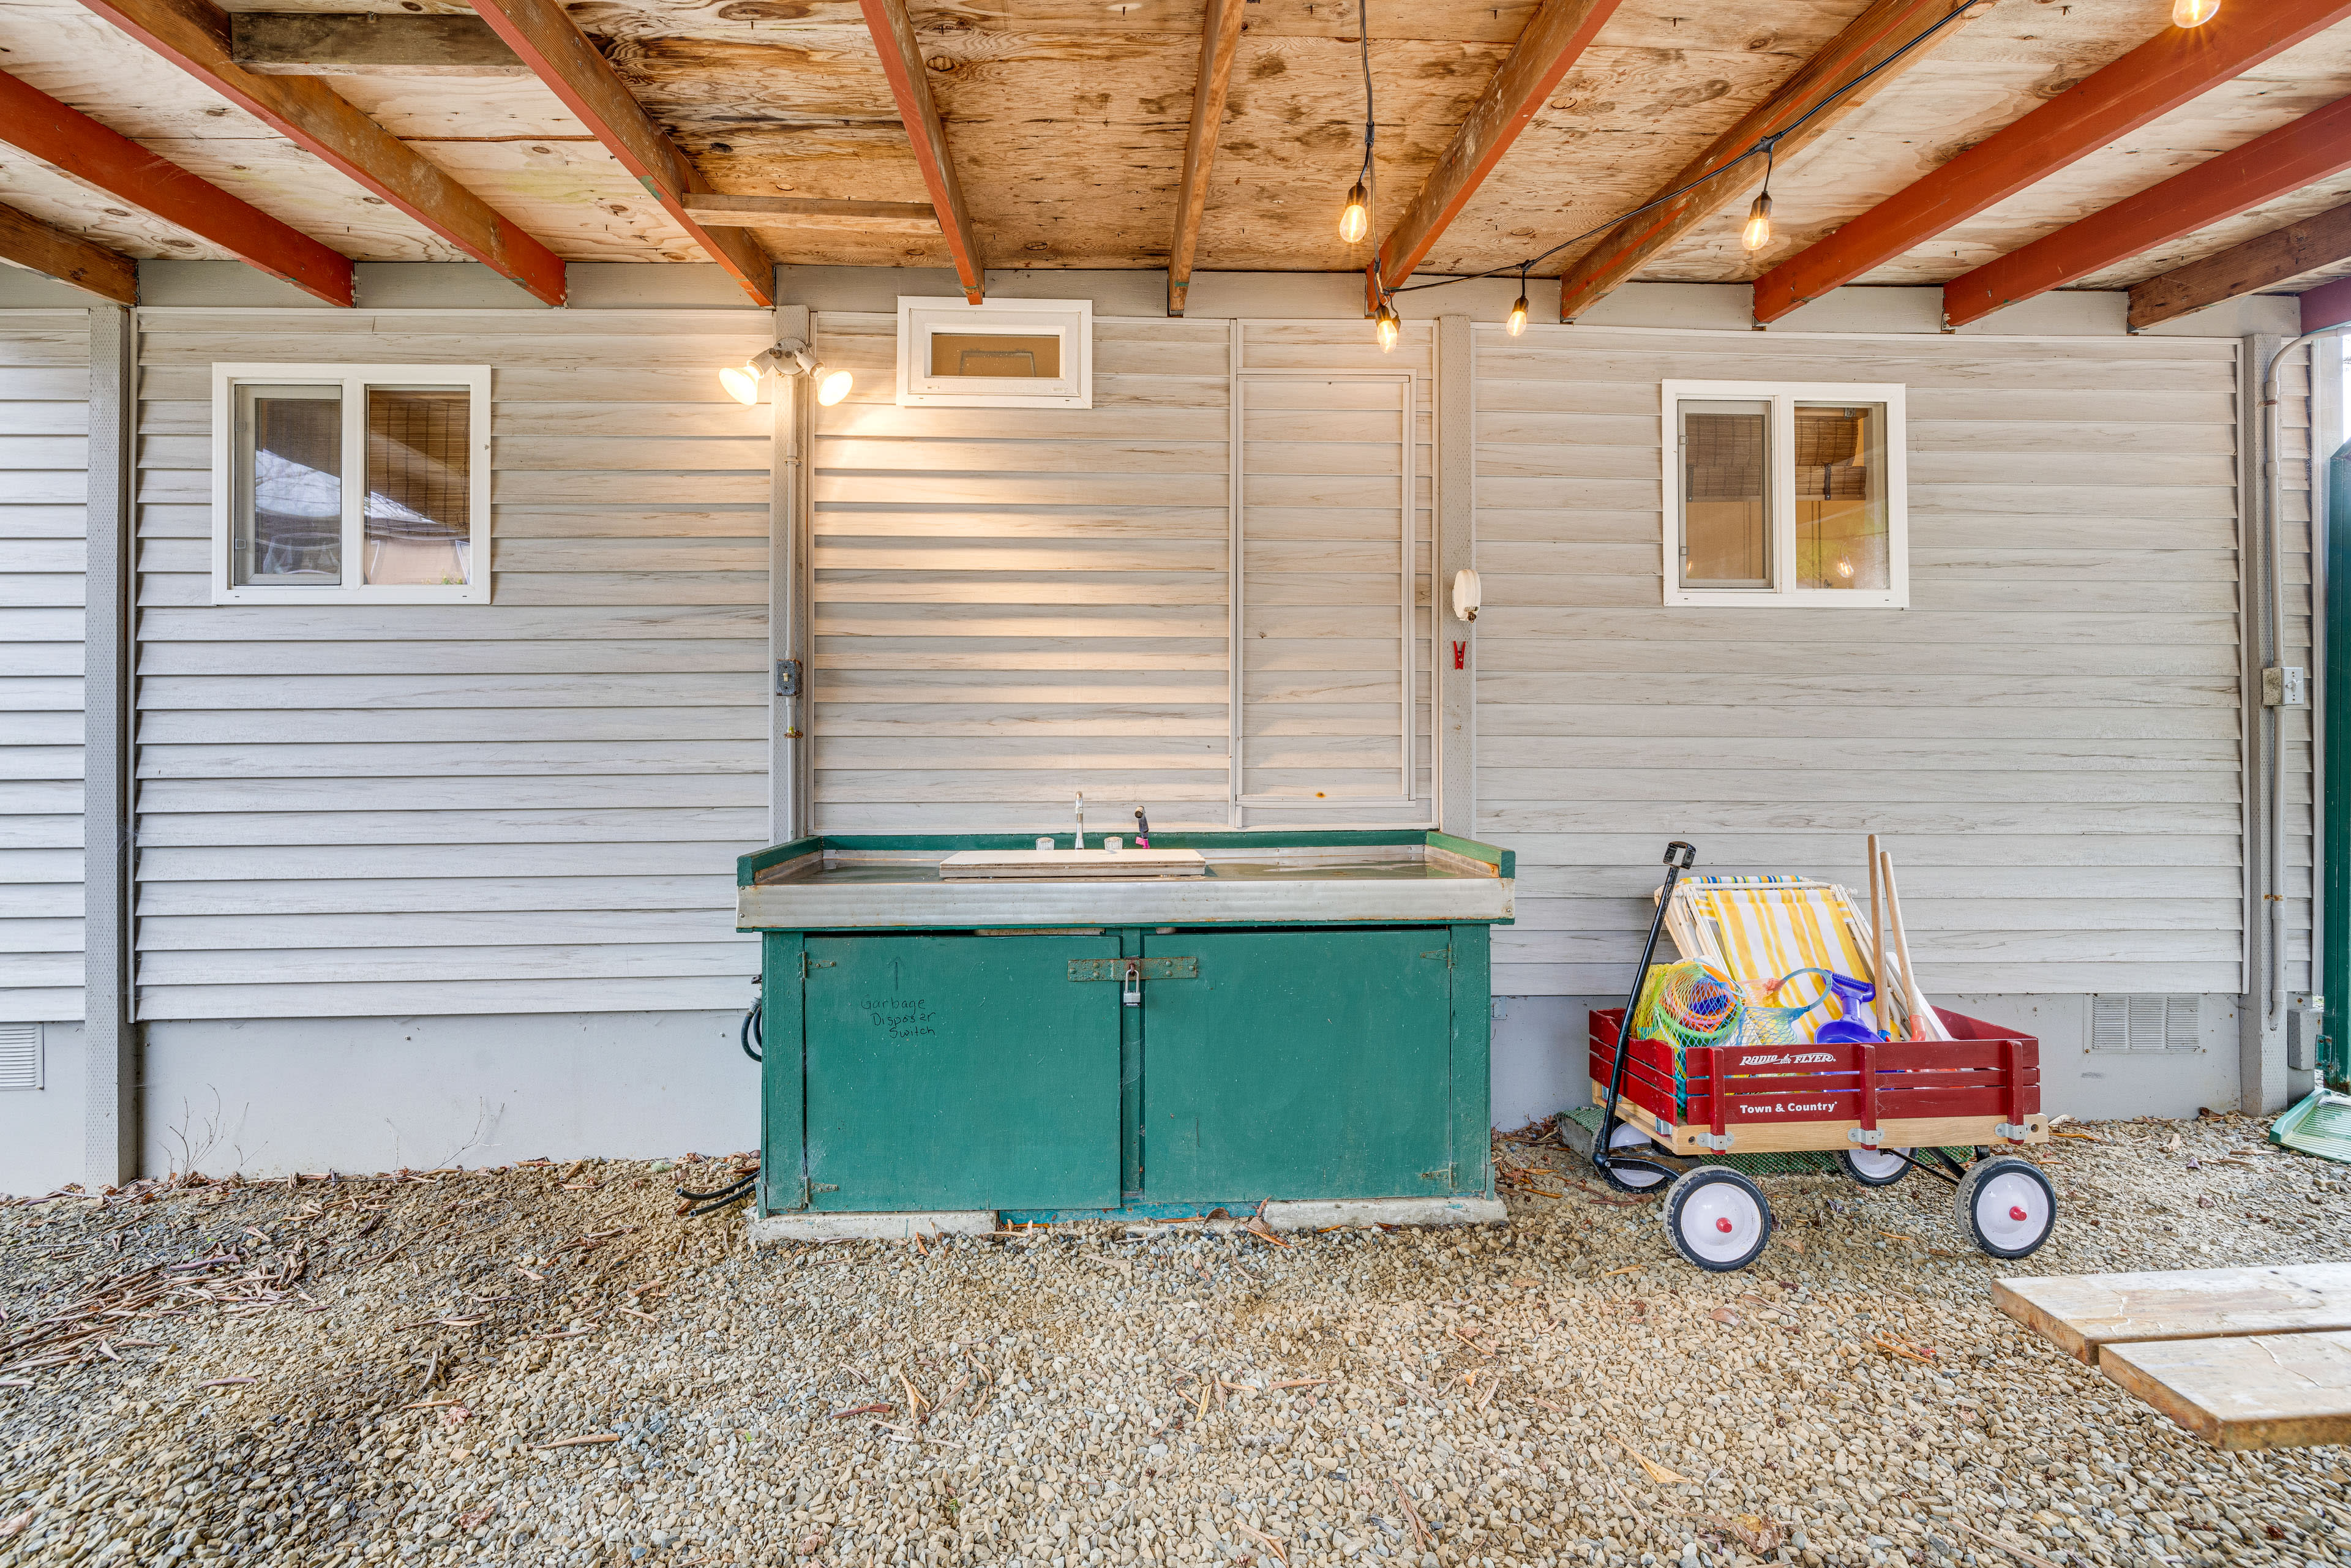 House Exterior | Sink | Beach Wagon w/ Chairs & Toys